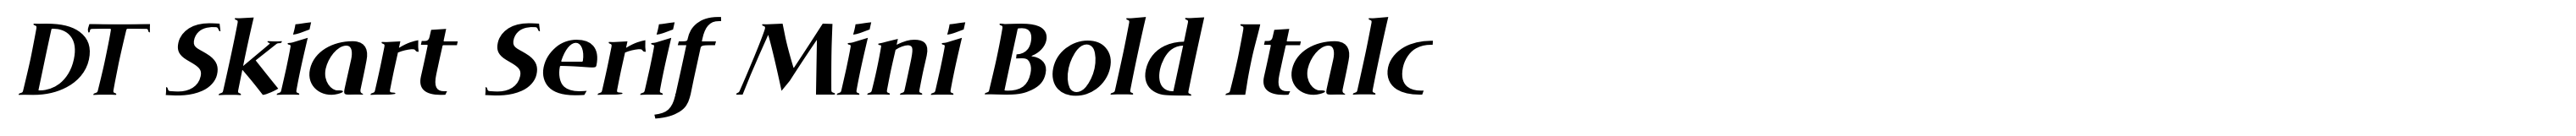 DT Skiart Serif Mini Bold Italc